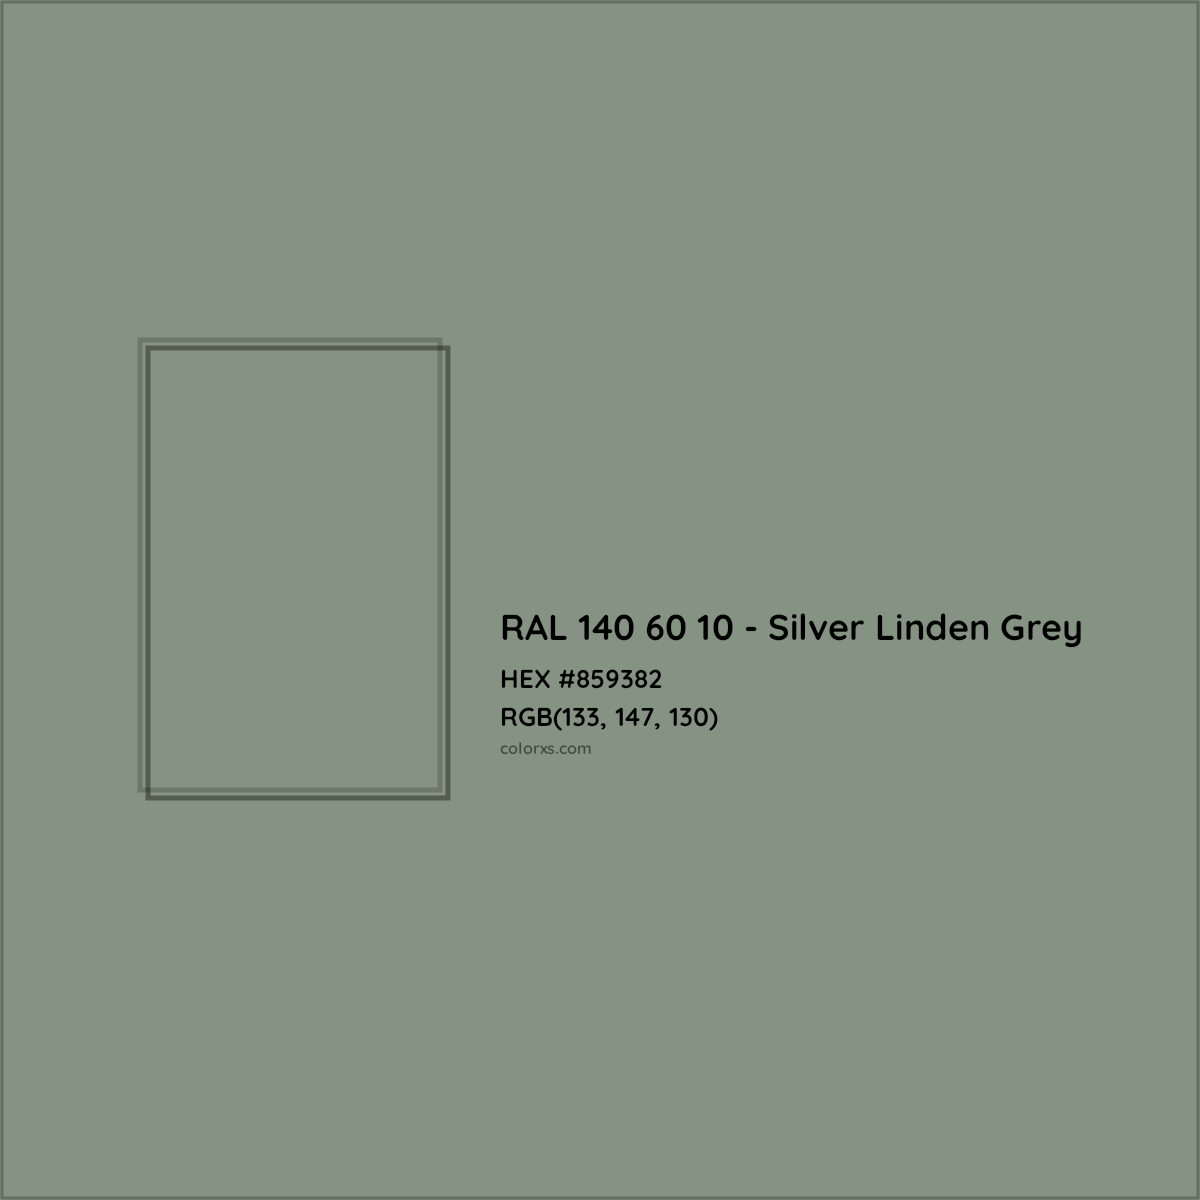 HEX #859382 RAL 140 60 10 - Silver Linden Grey CMS RAL Design - Color Code